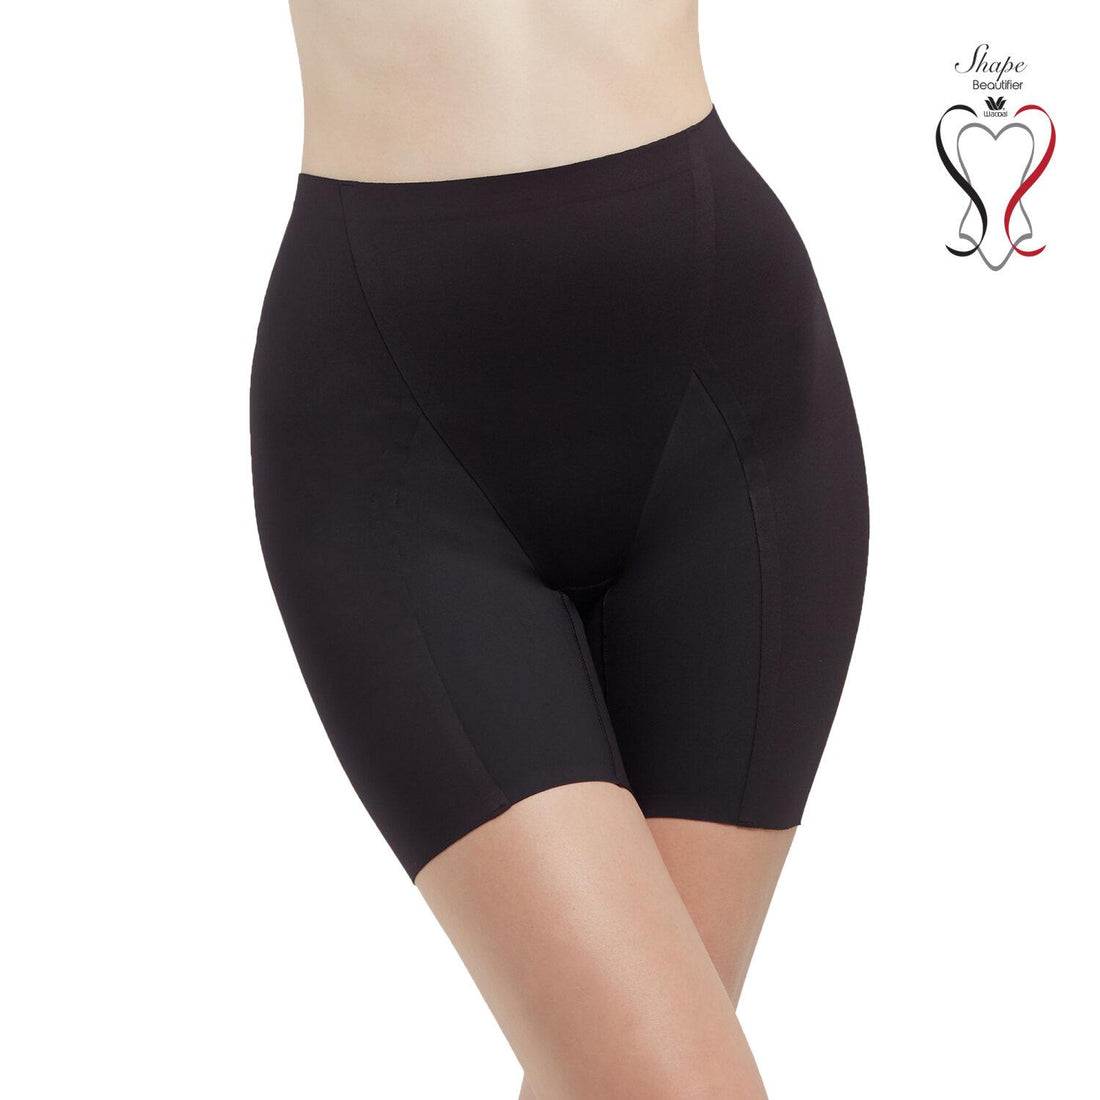 Wacoal Shapewear Stay Slimming Pants Stay style, normal waist, model WG4126, black color (BL)